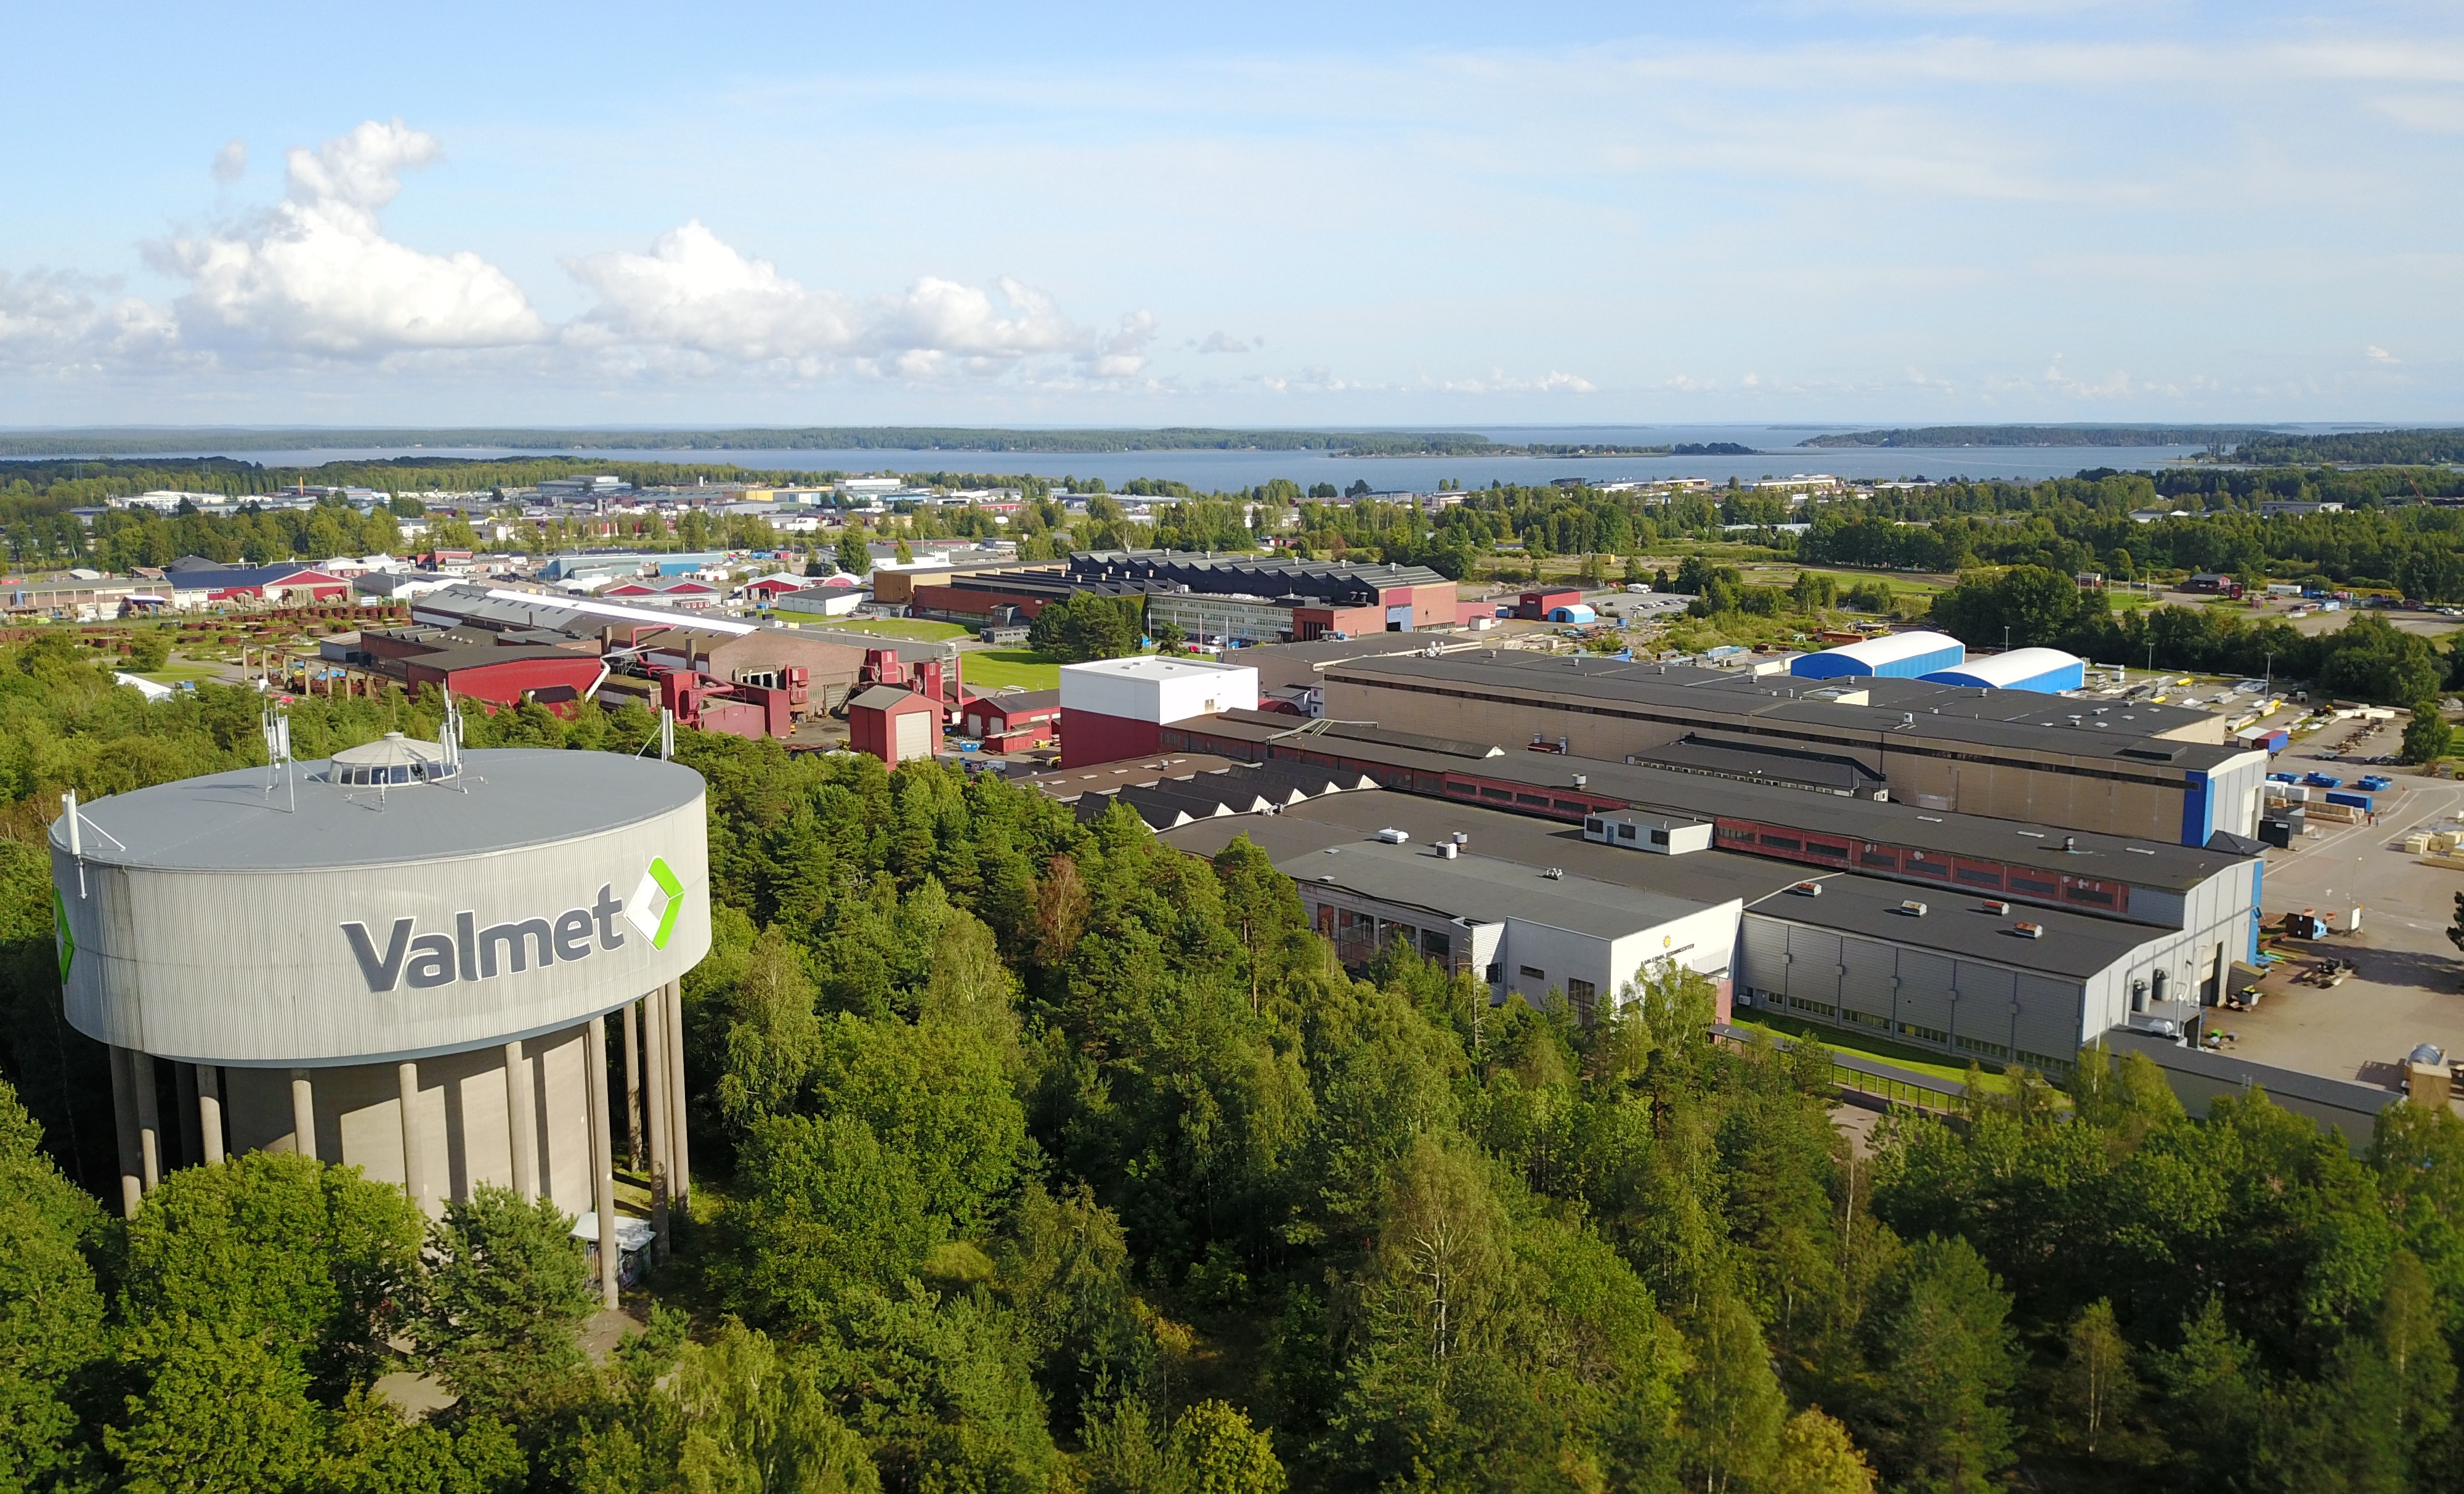 Valmet Karlstad, Sweden, outdoor picture with sky, trees, buildings